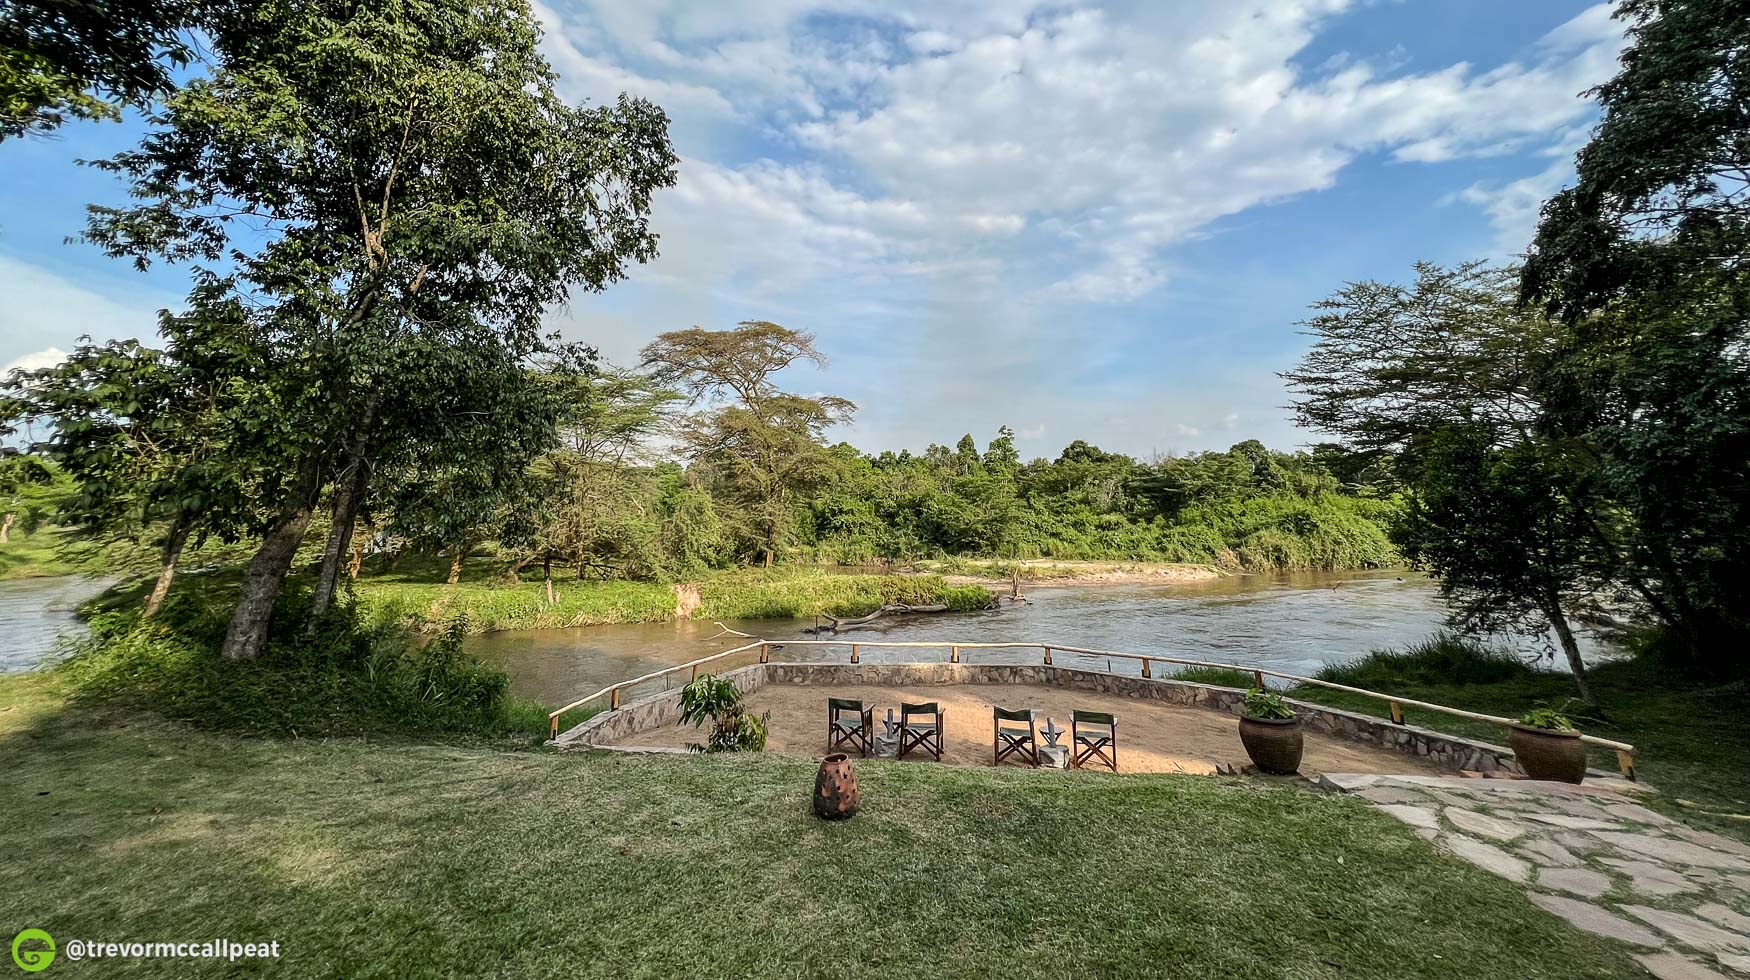 Destinations We Love: Uganda